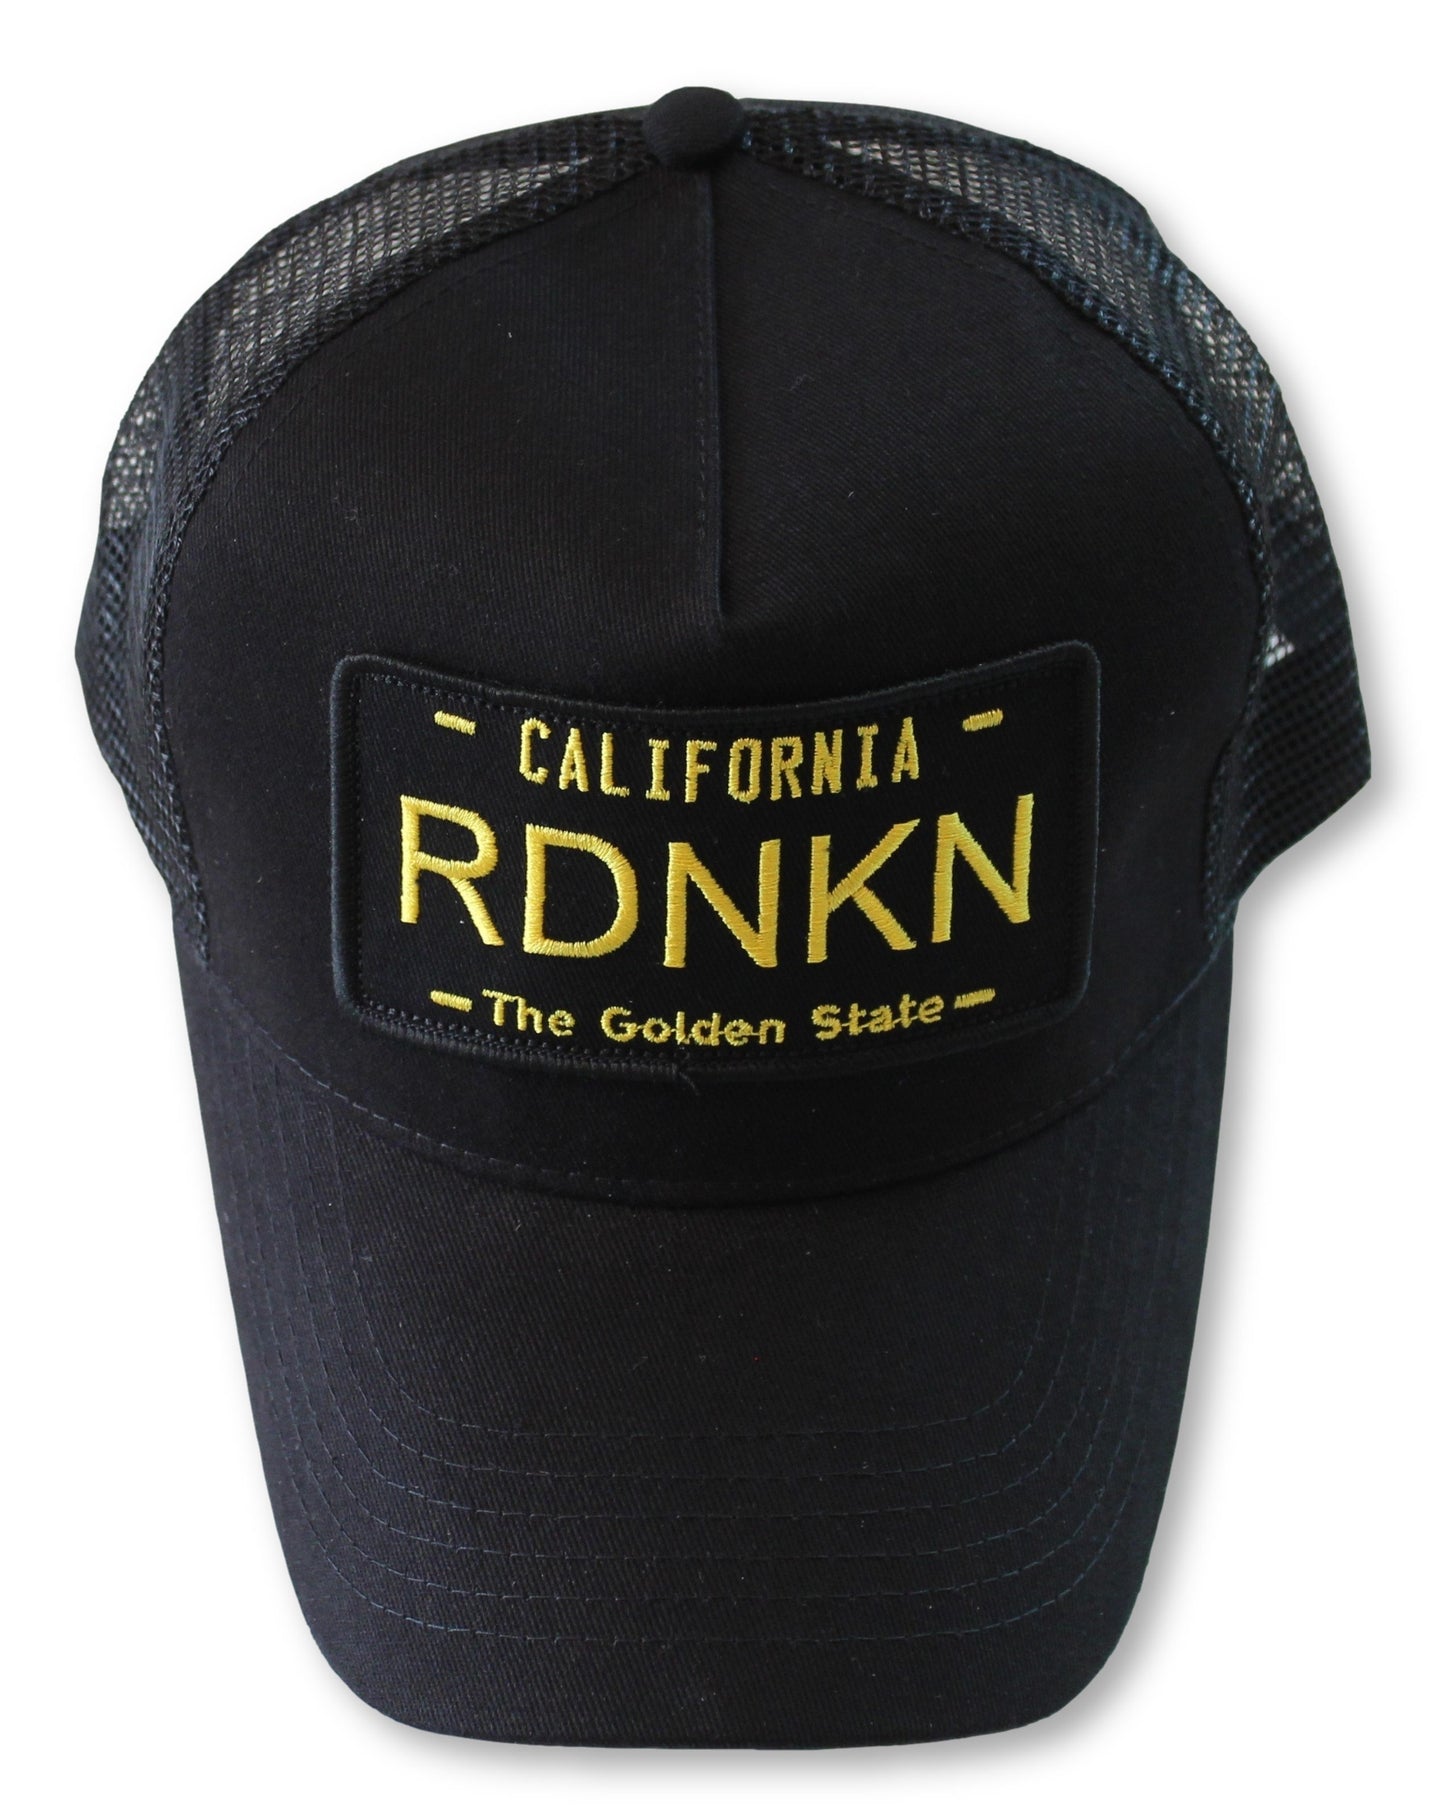 California RDNKN Mesh Snapback Trucker hat